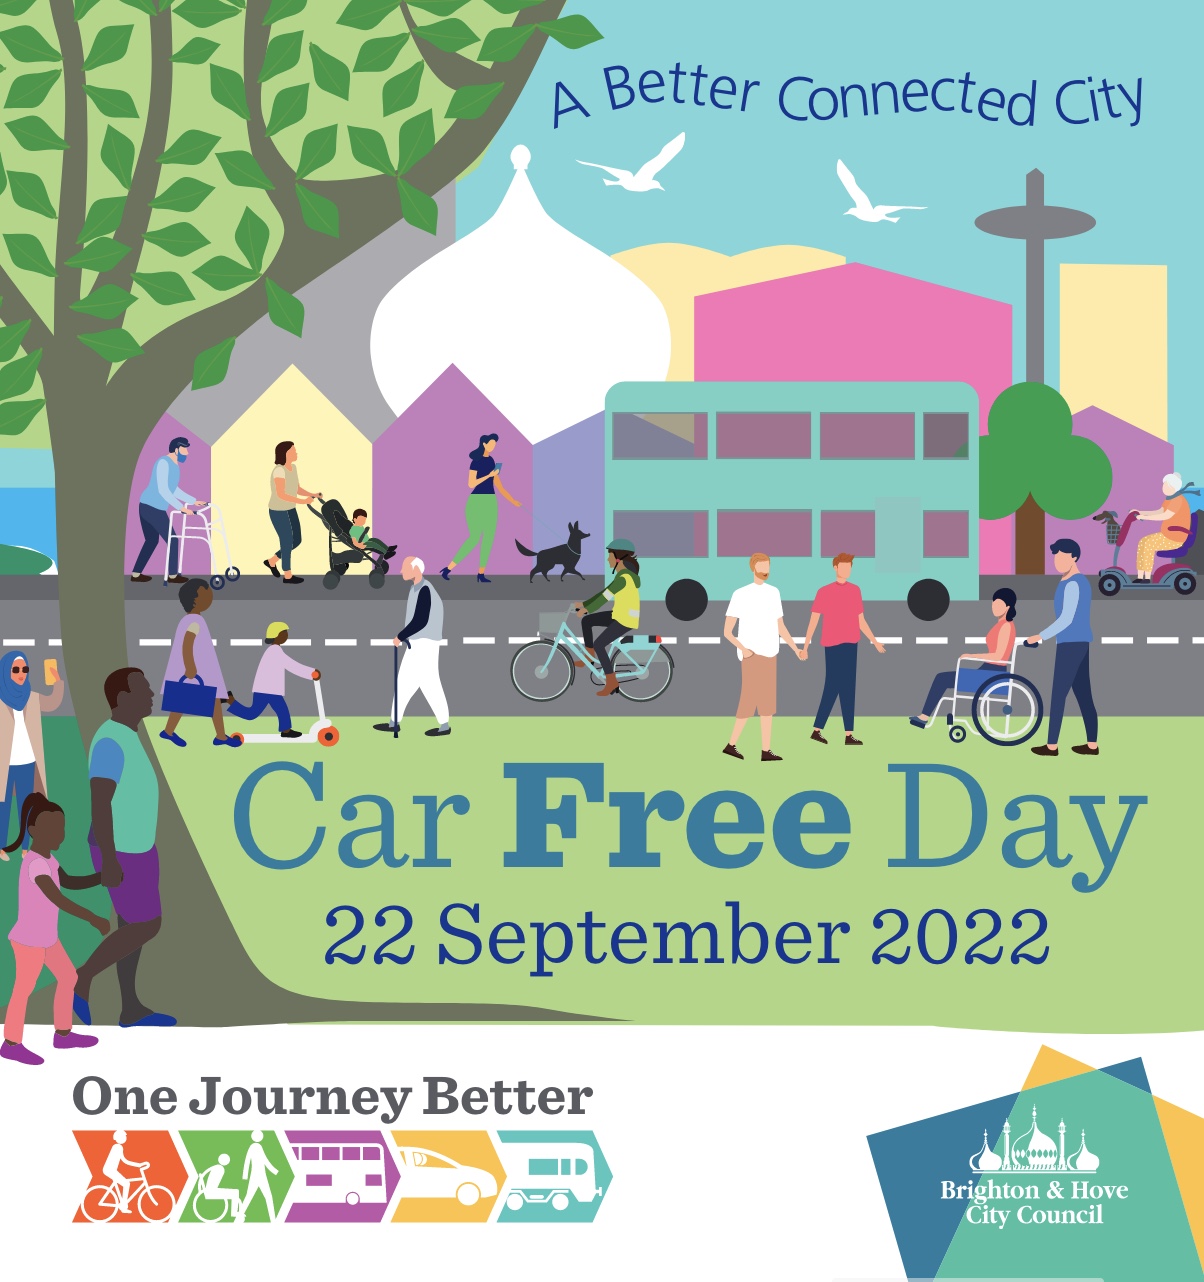 Car Free Day events in Brighton & Hove